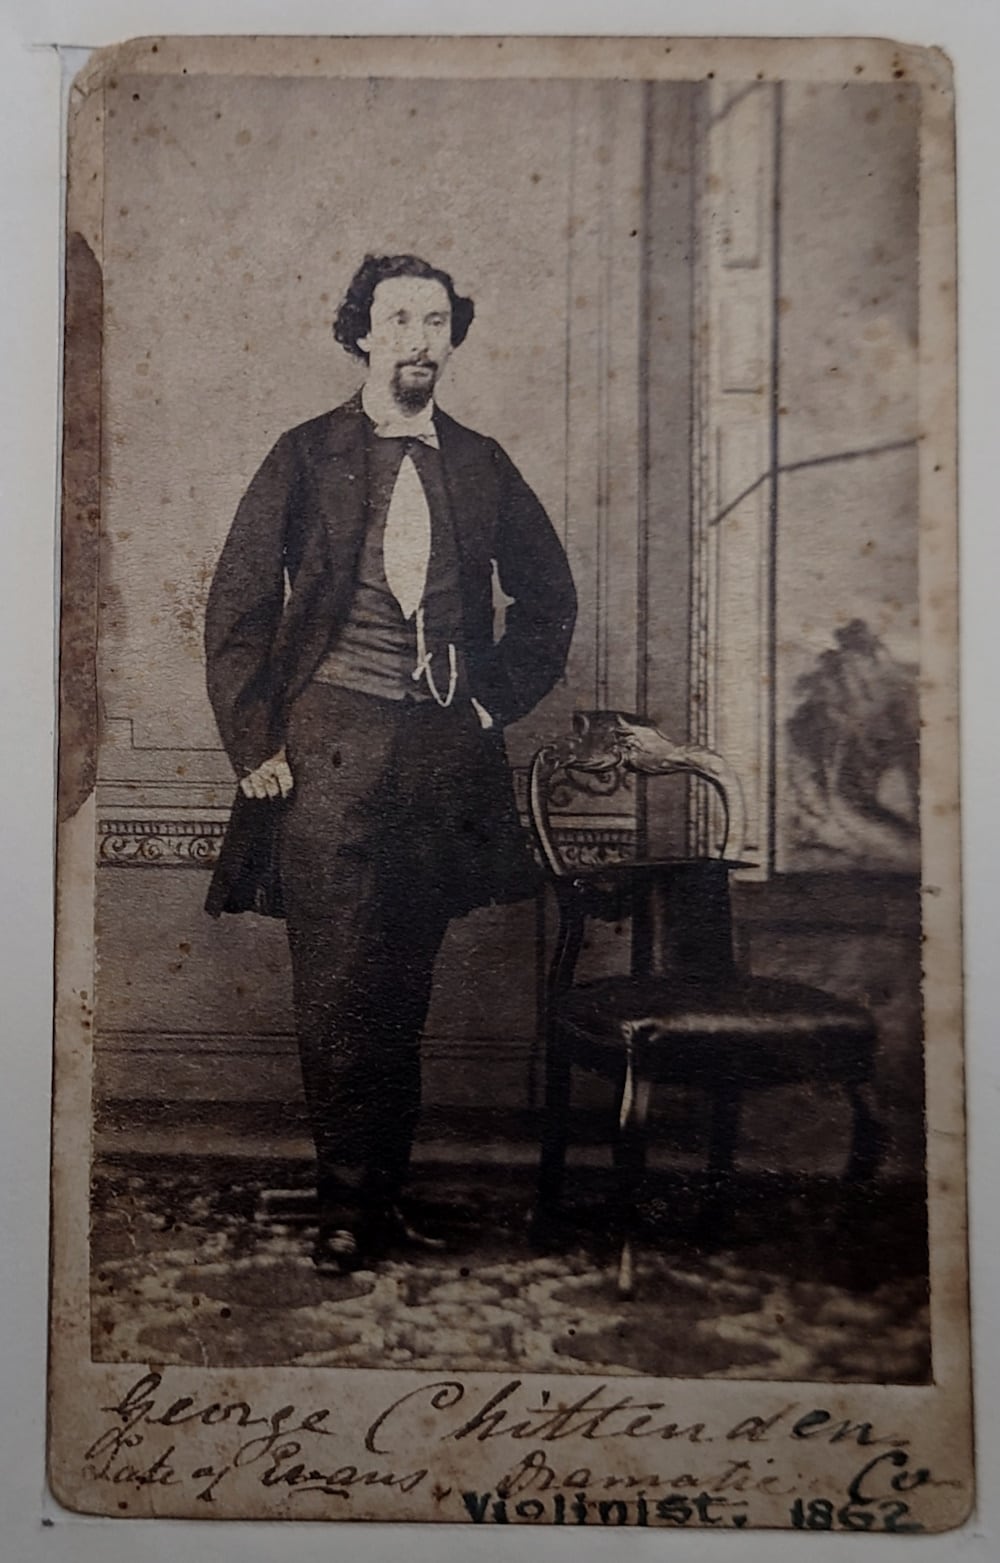 George Chittenden, junior, Adelaide, SA, December 1863 or January 1864; B. Goode, photographer